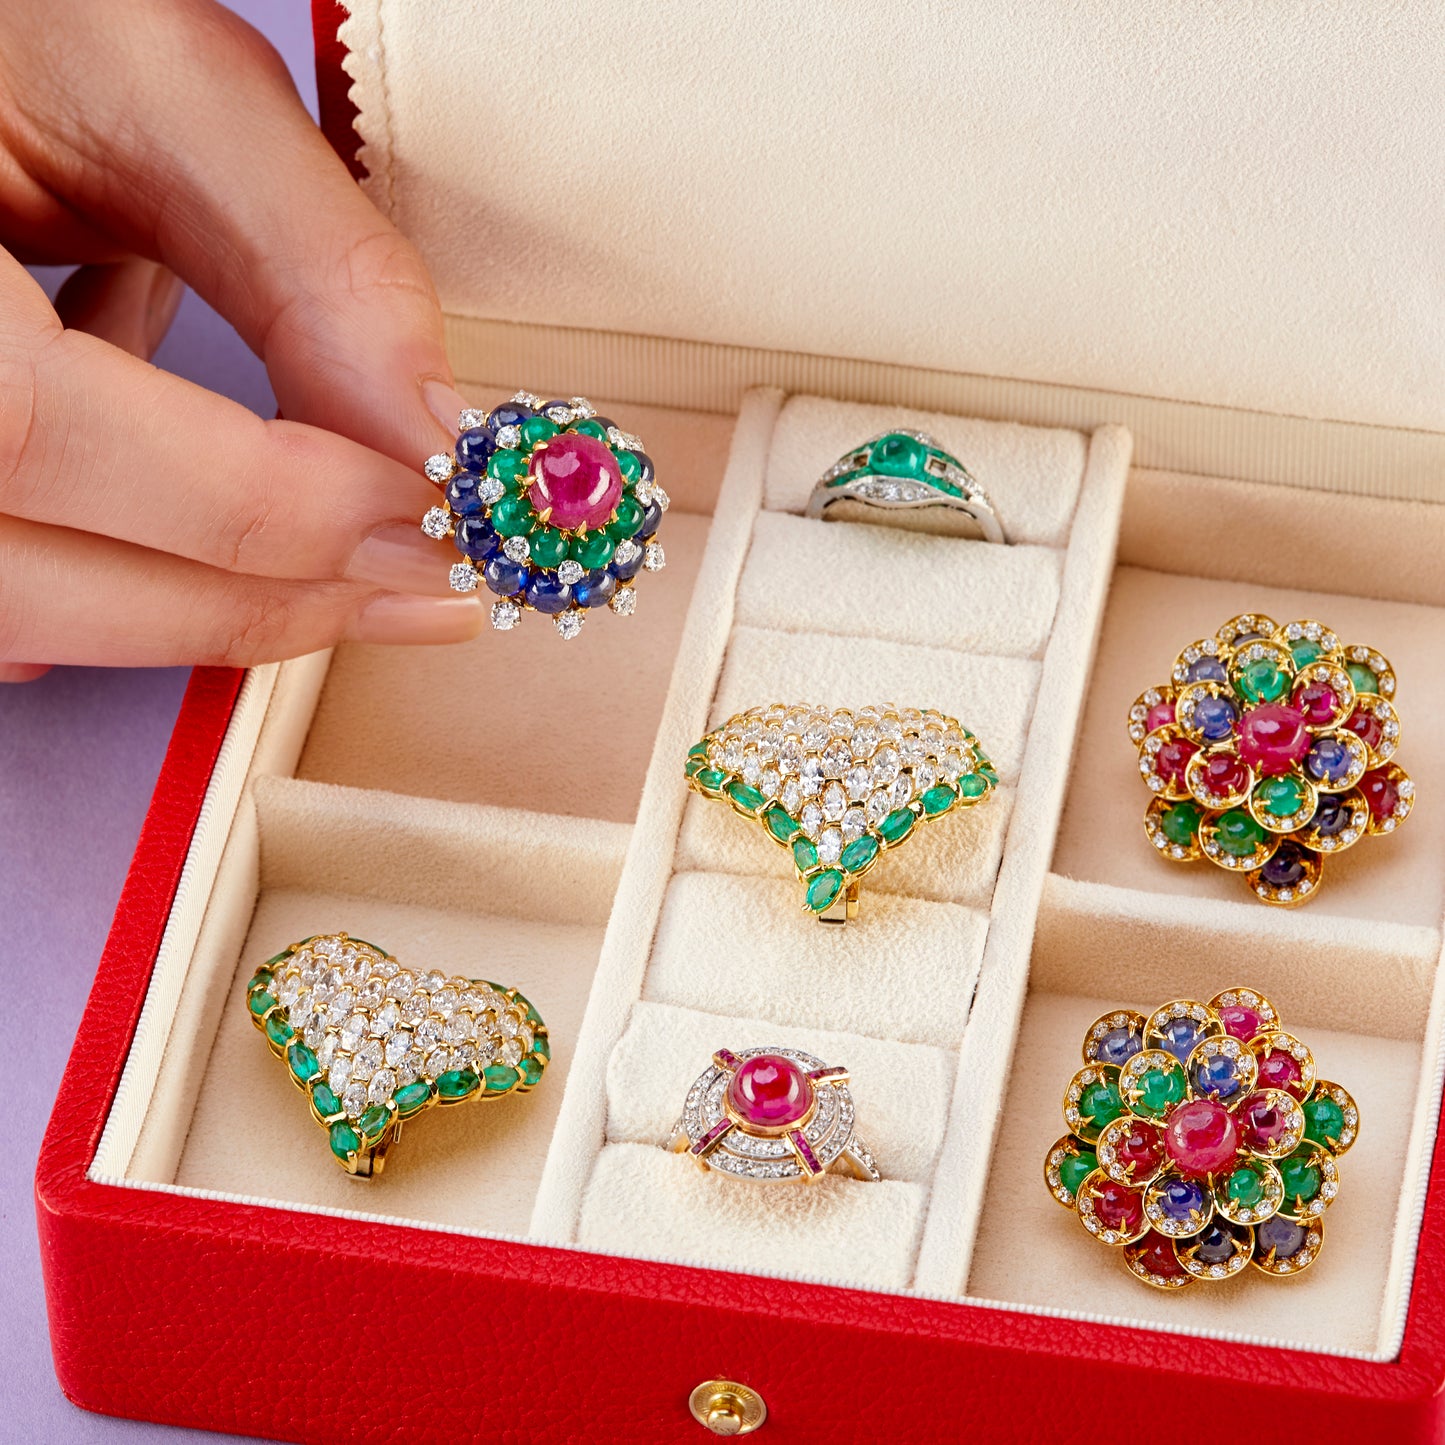 Bulgari 1960s 18KT Yellow Gold Ruby, Diamond, Emerald & Sapphire Ring front view in jewelry box